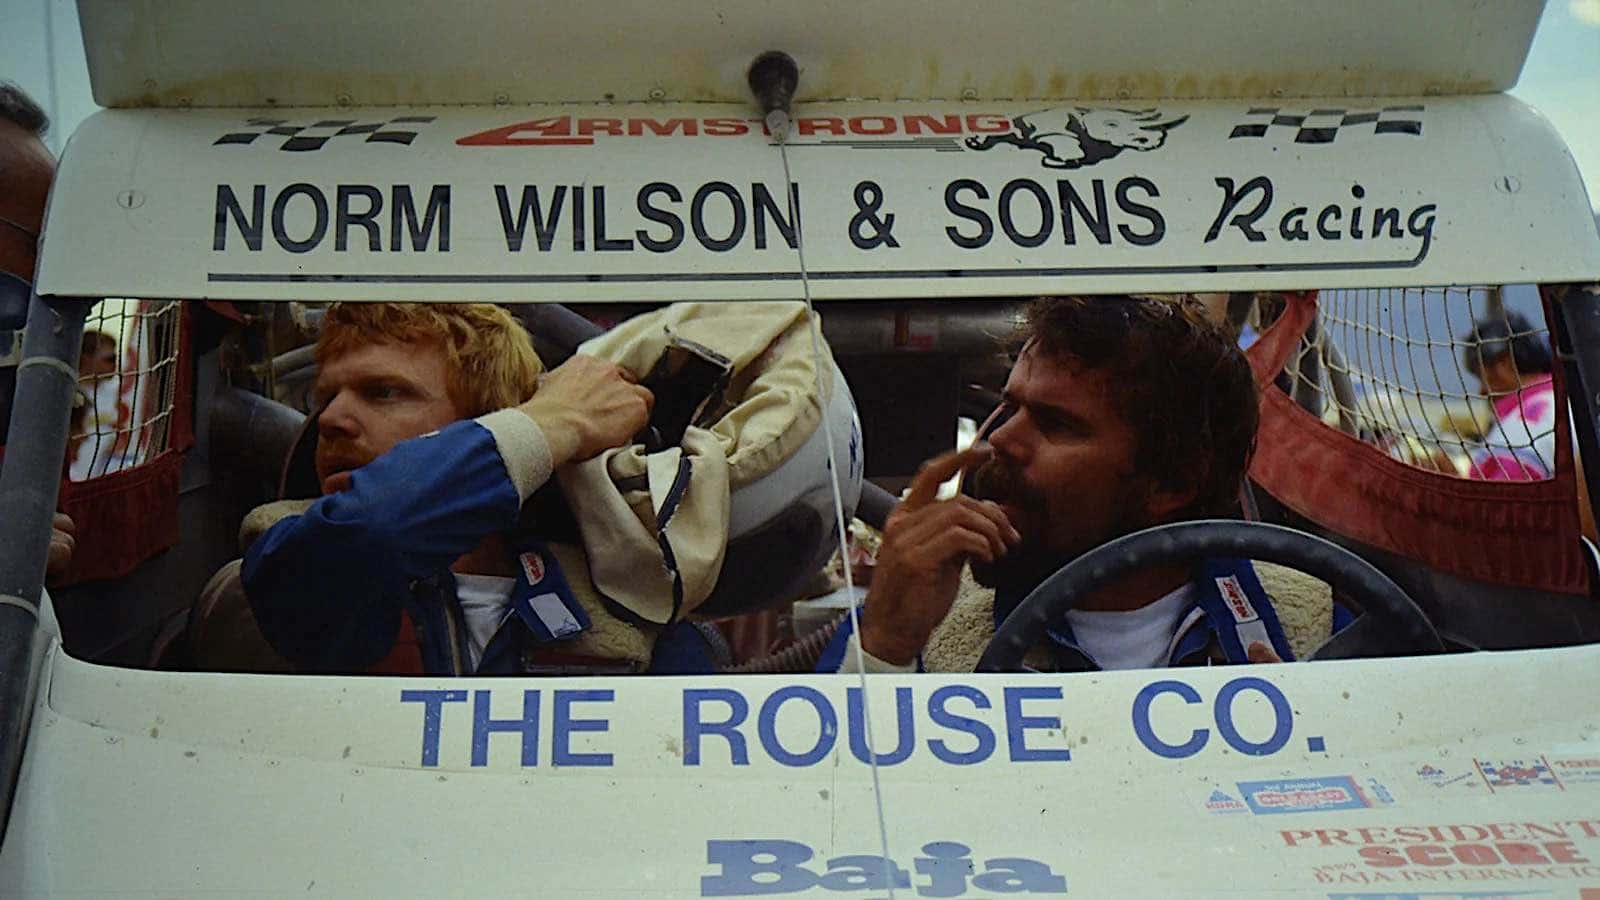 Wilson Motorsports Class 1